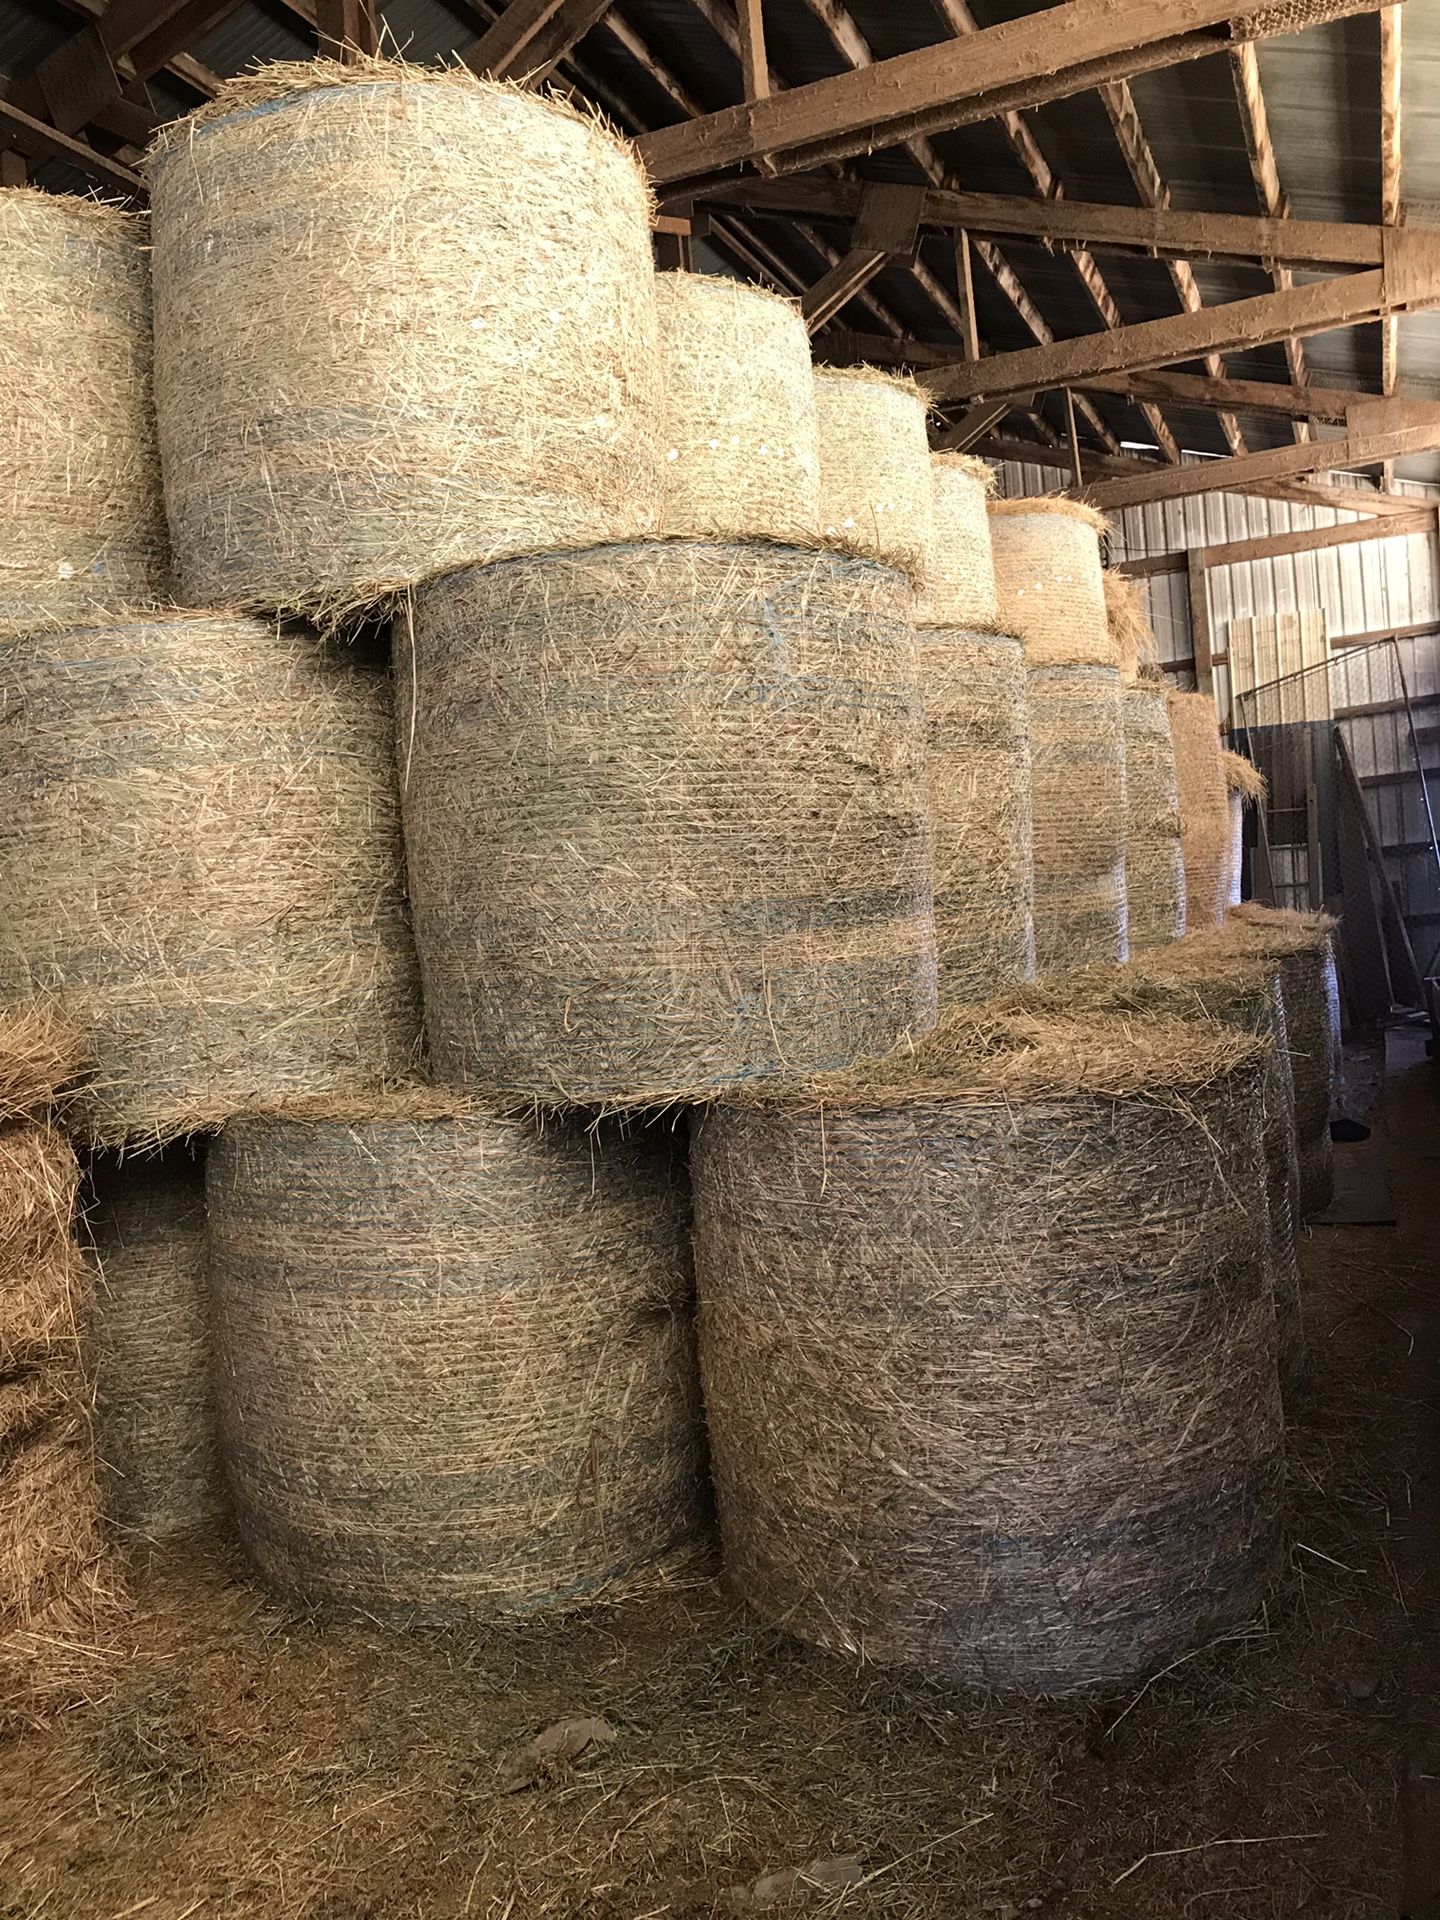 Hay- dry round bales